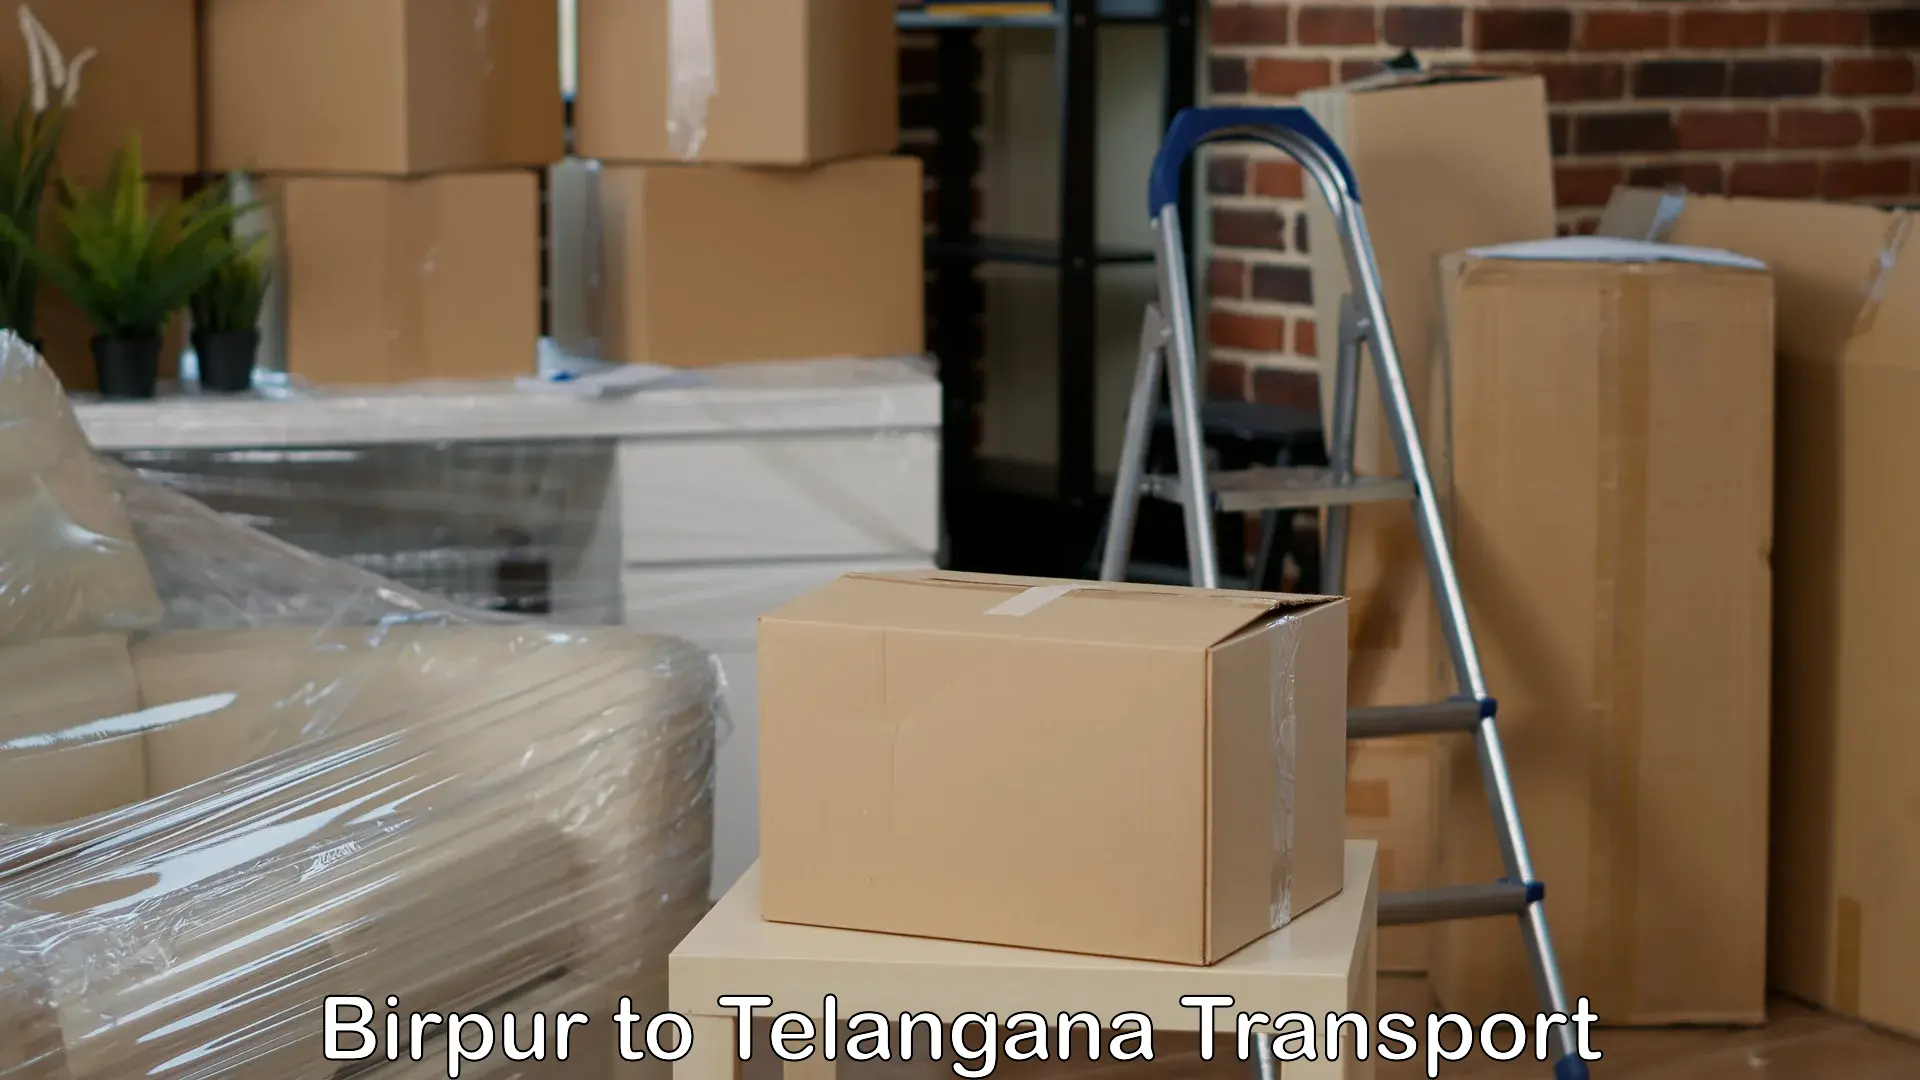 Domestic goods transportation services Birpur to Karimnagar